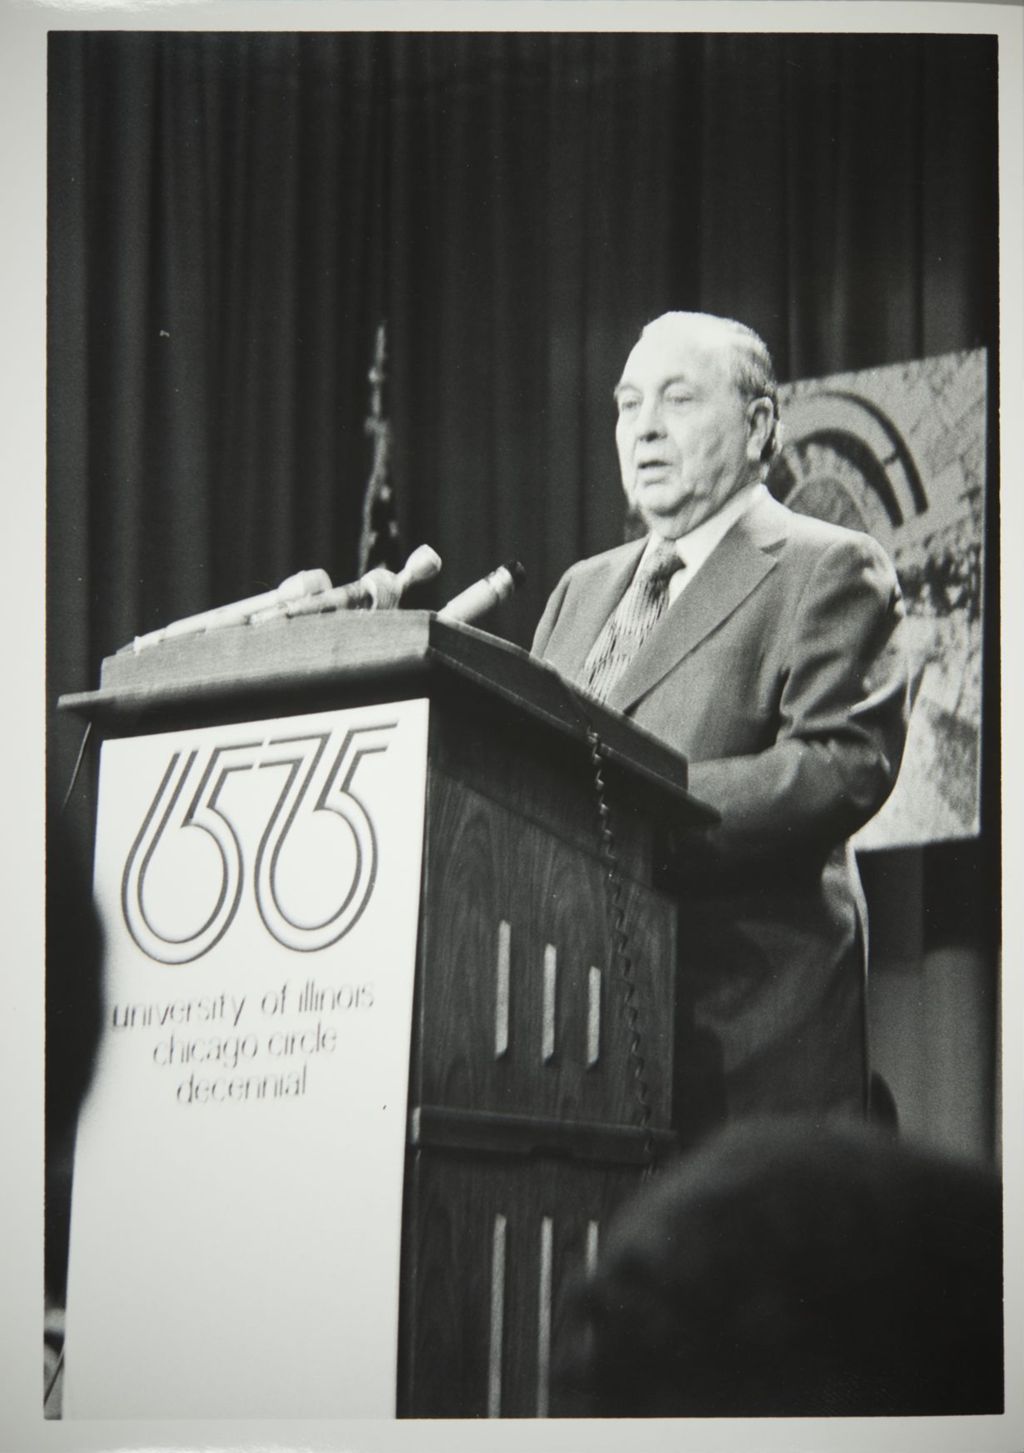 Miniature of Mayor Richard J. Daley speaking at the Decennial Celebration